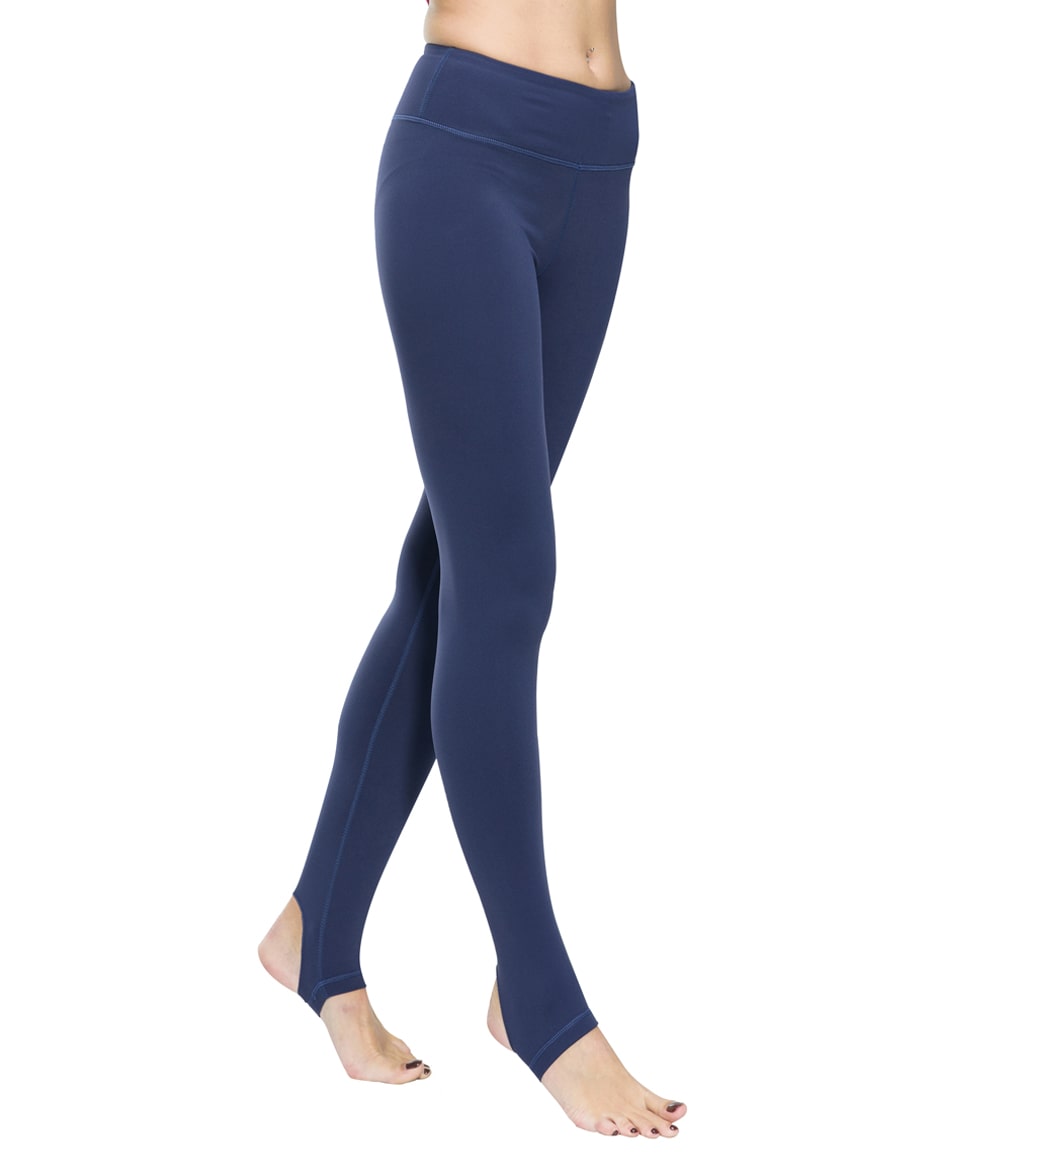 LOVESOFT Women's Workout Yoga Pants Stirrup Leggings